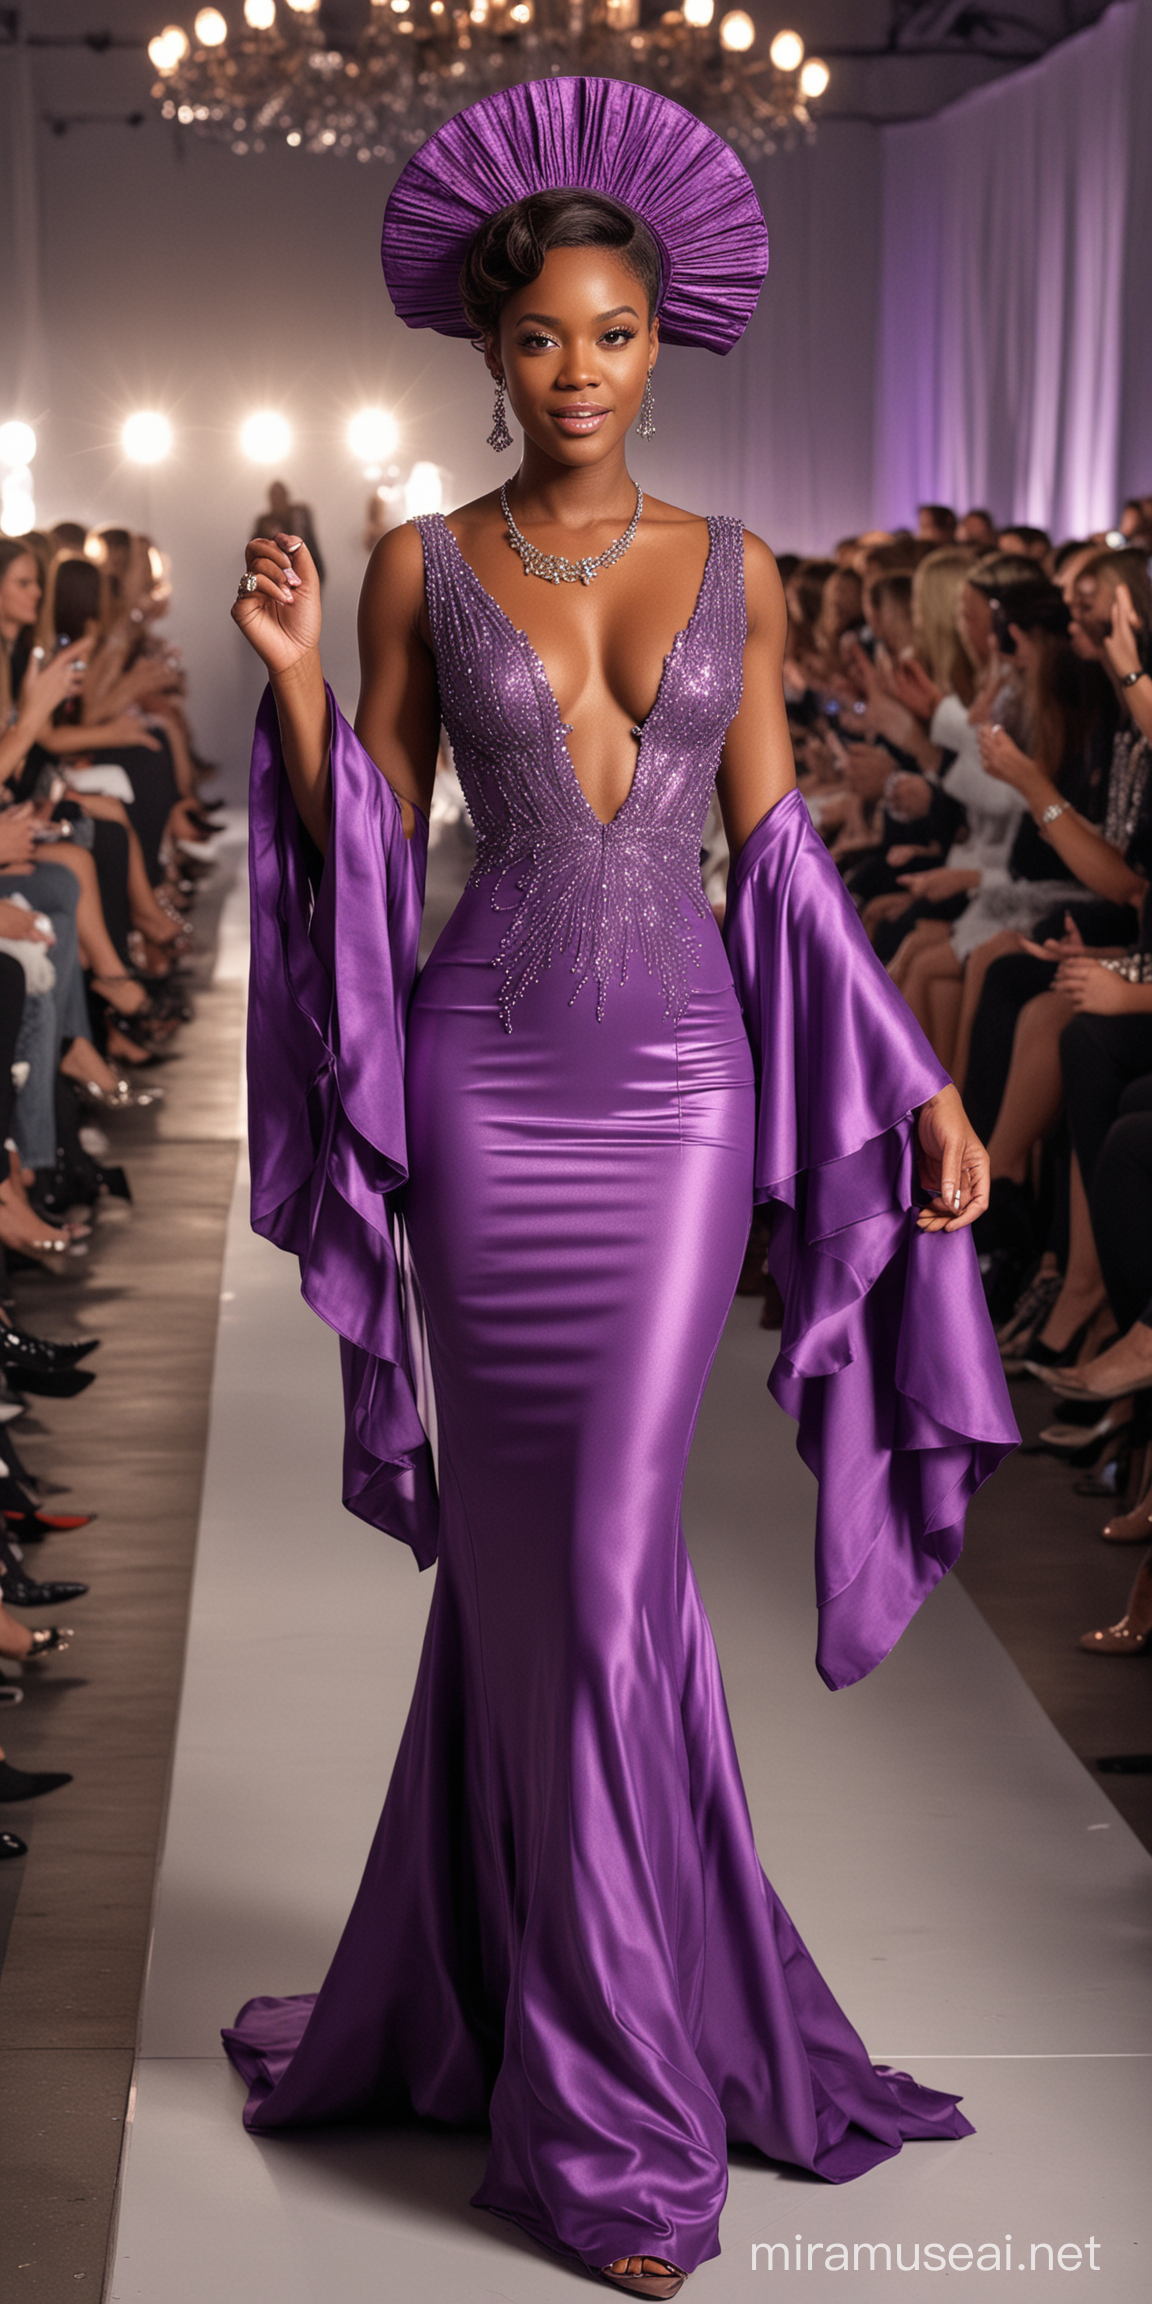 Elegant African American Model in Purple Maxi Evening Attire on Runway